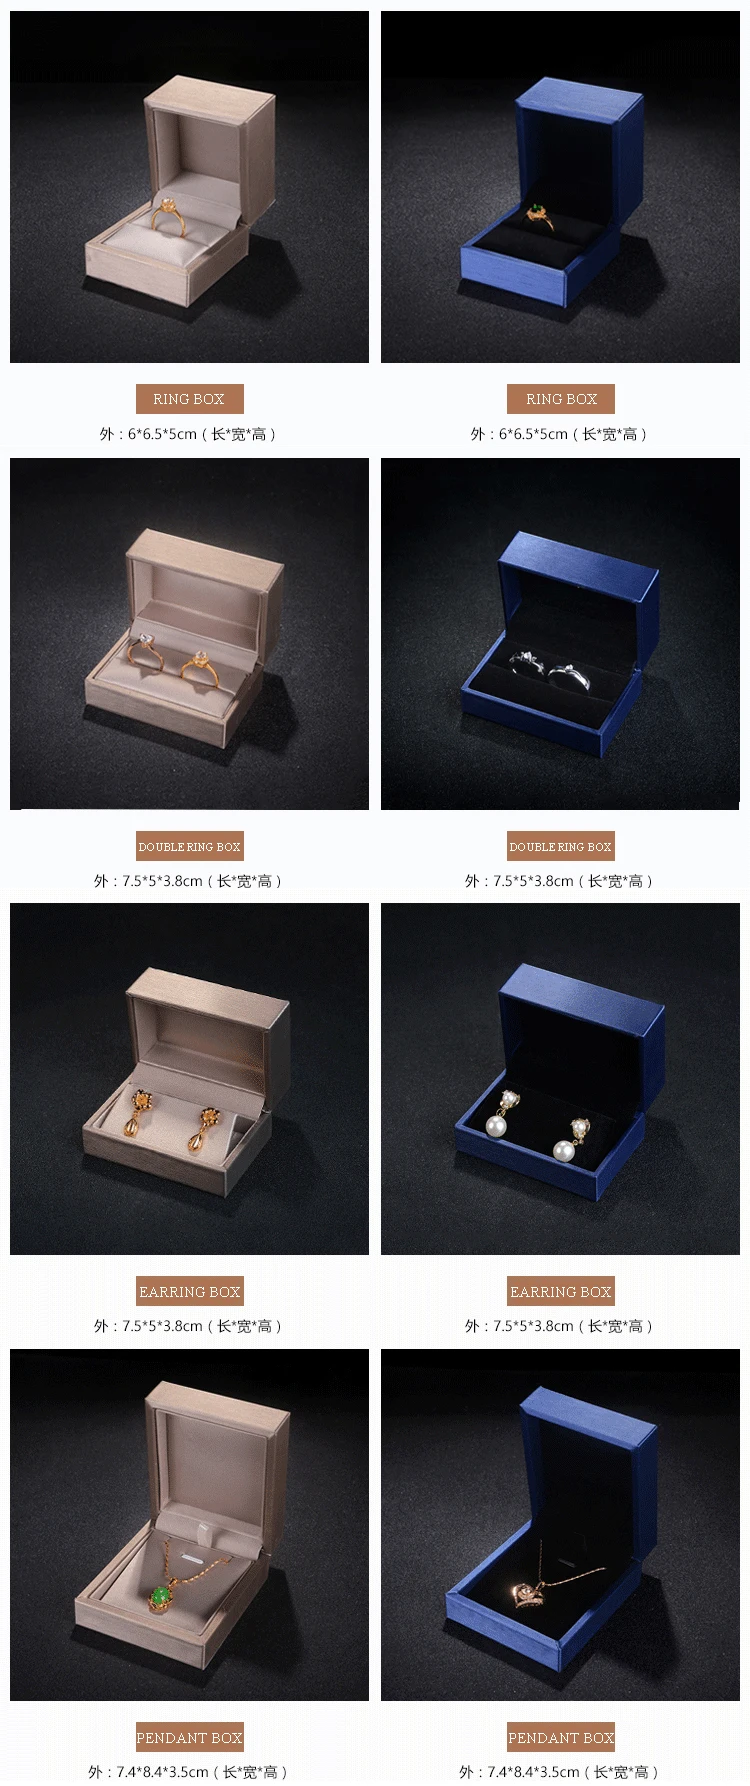 4 Plastic Jewelry Box.jpg